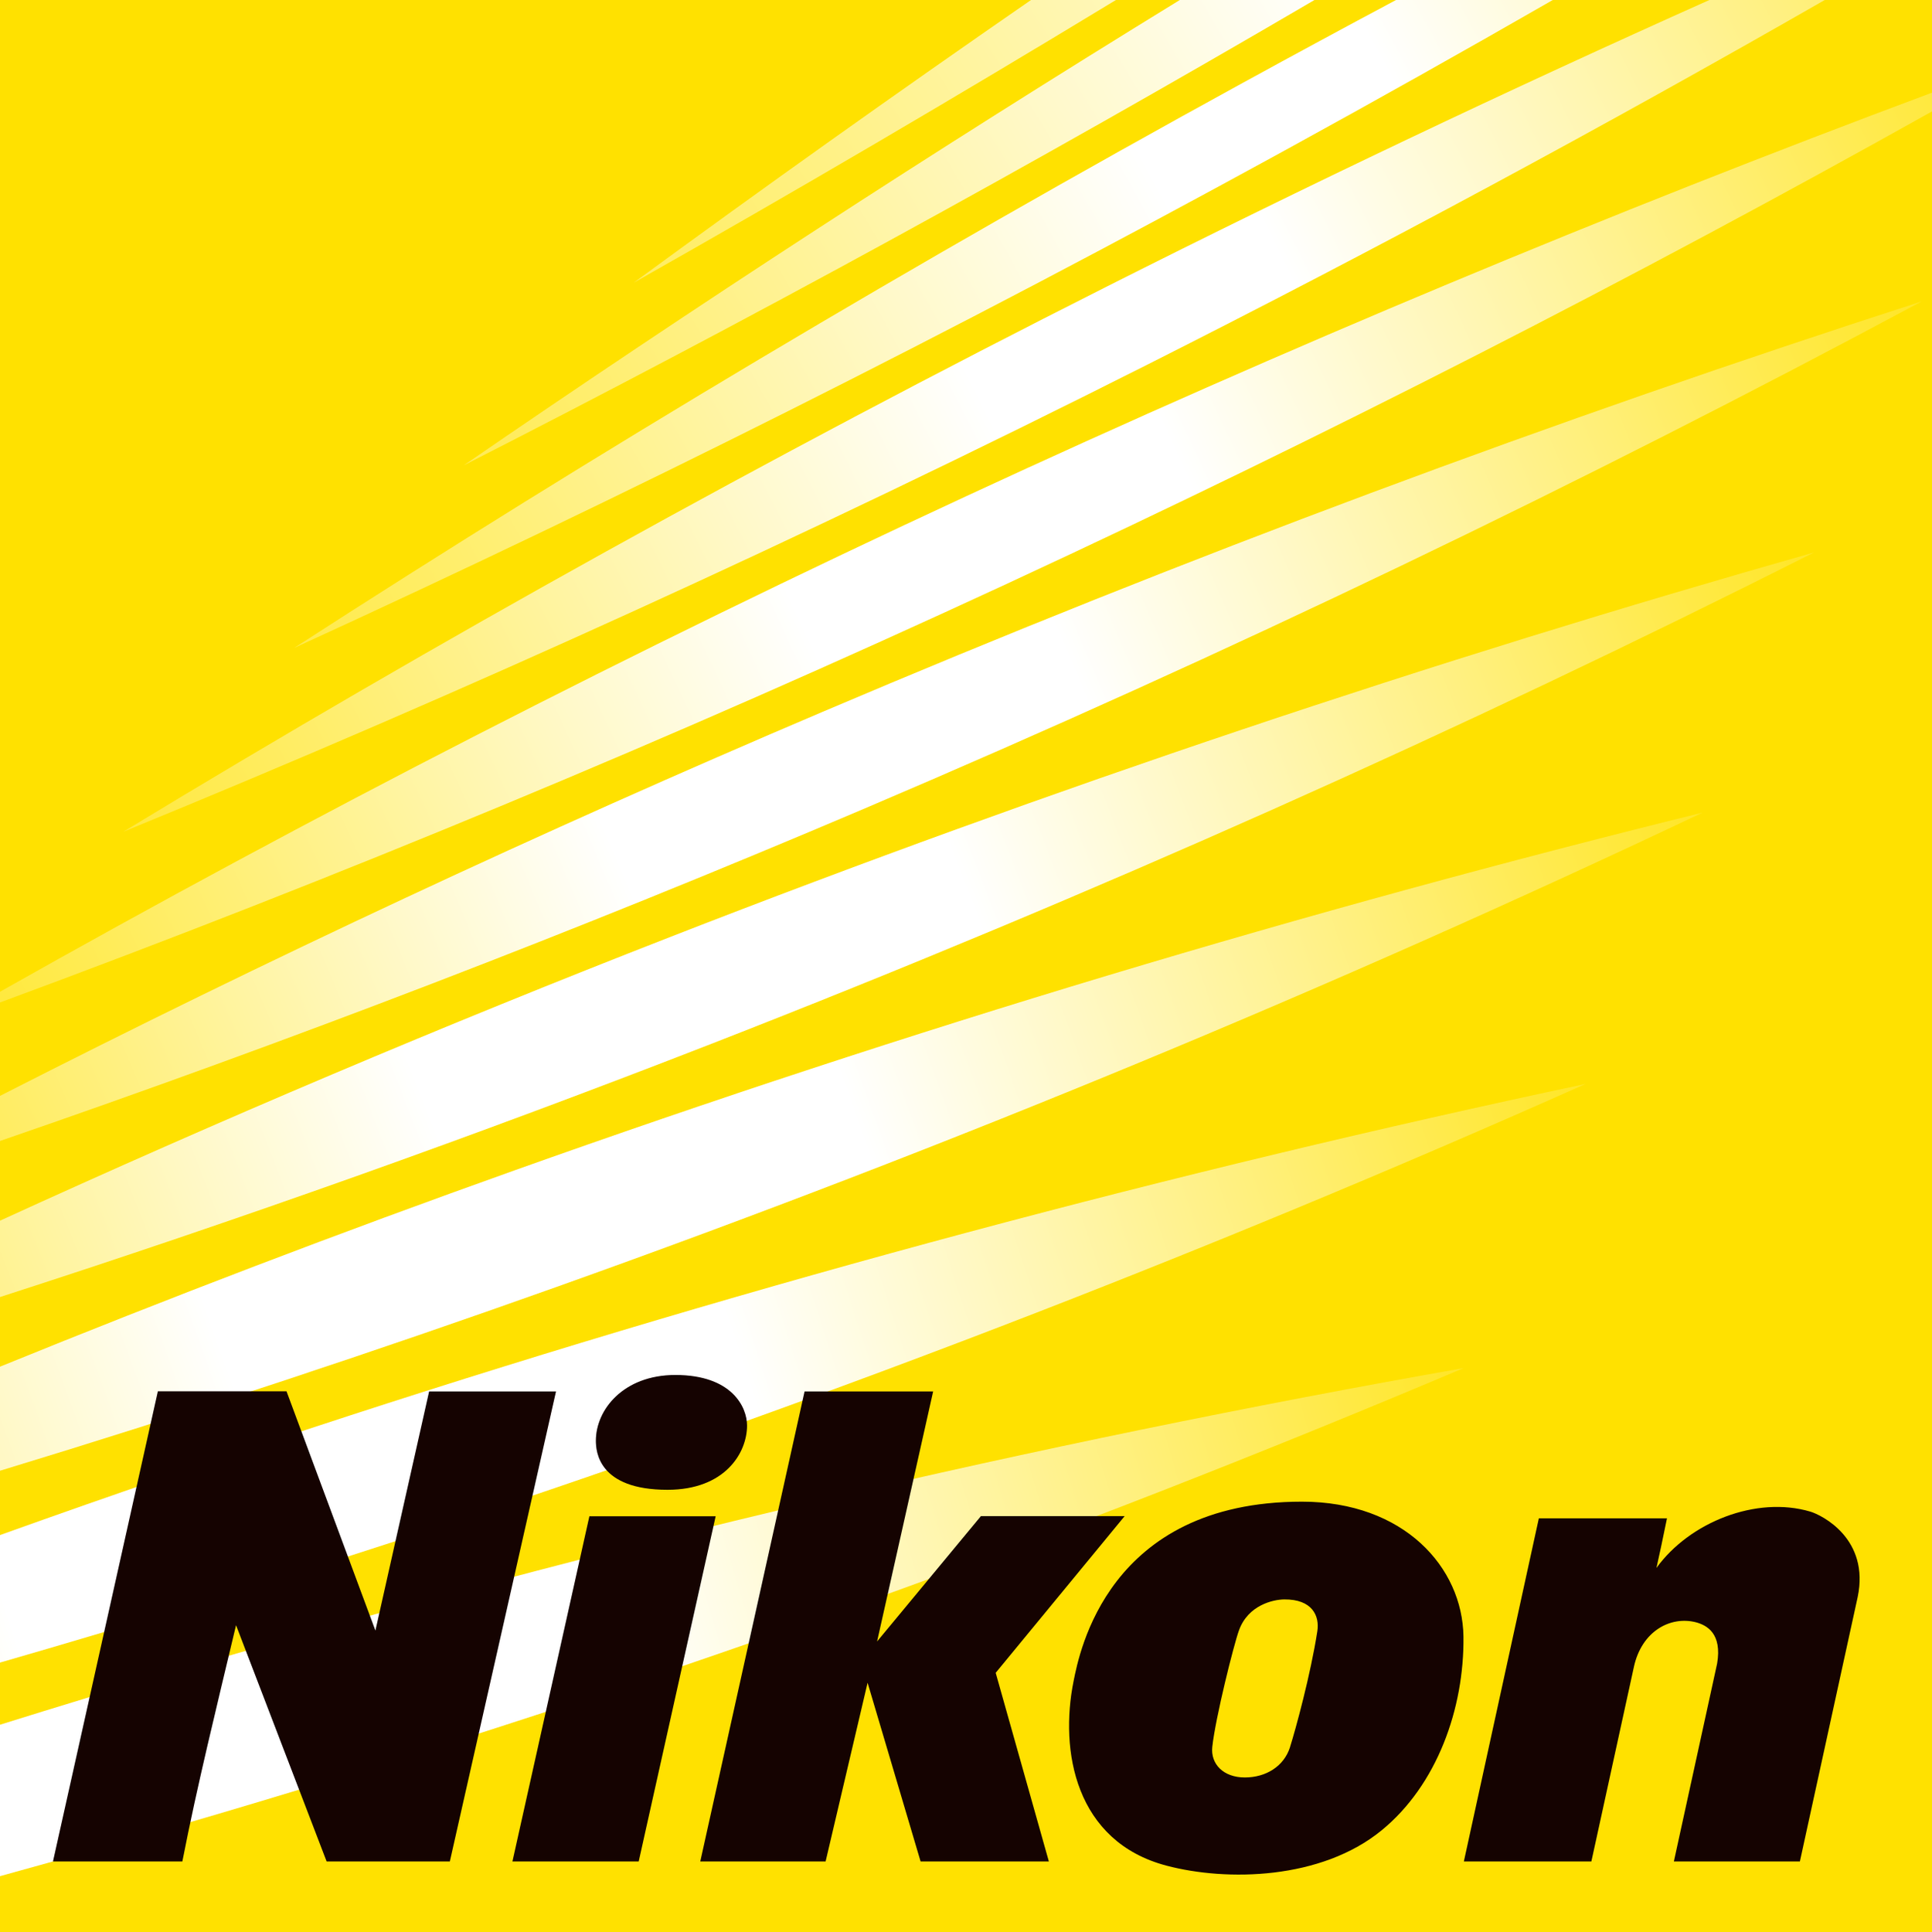 Nikon_Logo.svg.png